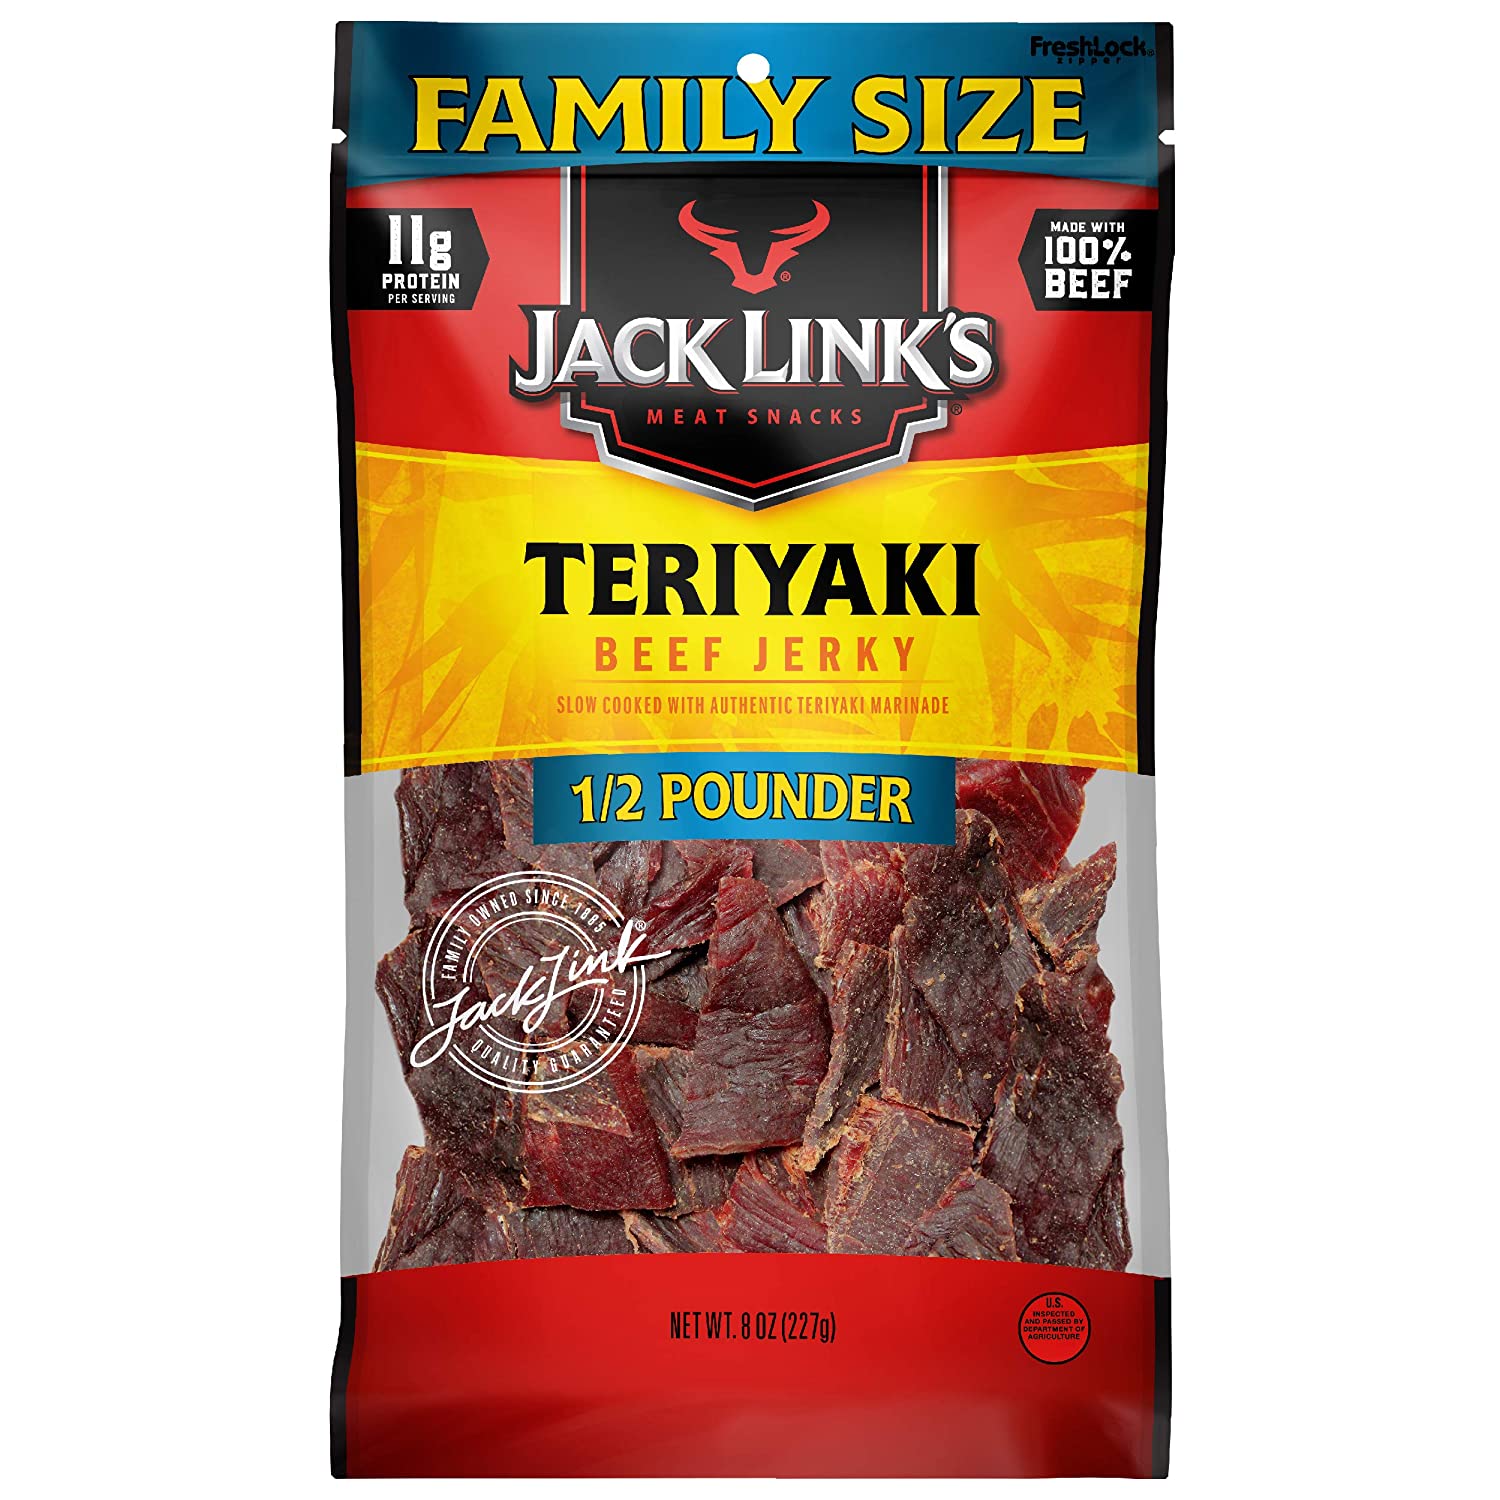 8-Oz Jack Link's Beef Jerky (Teriyaki) $8.95 w/ S&S + Free Shipping w/ Prime or on $25+